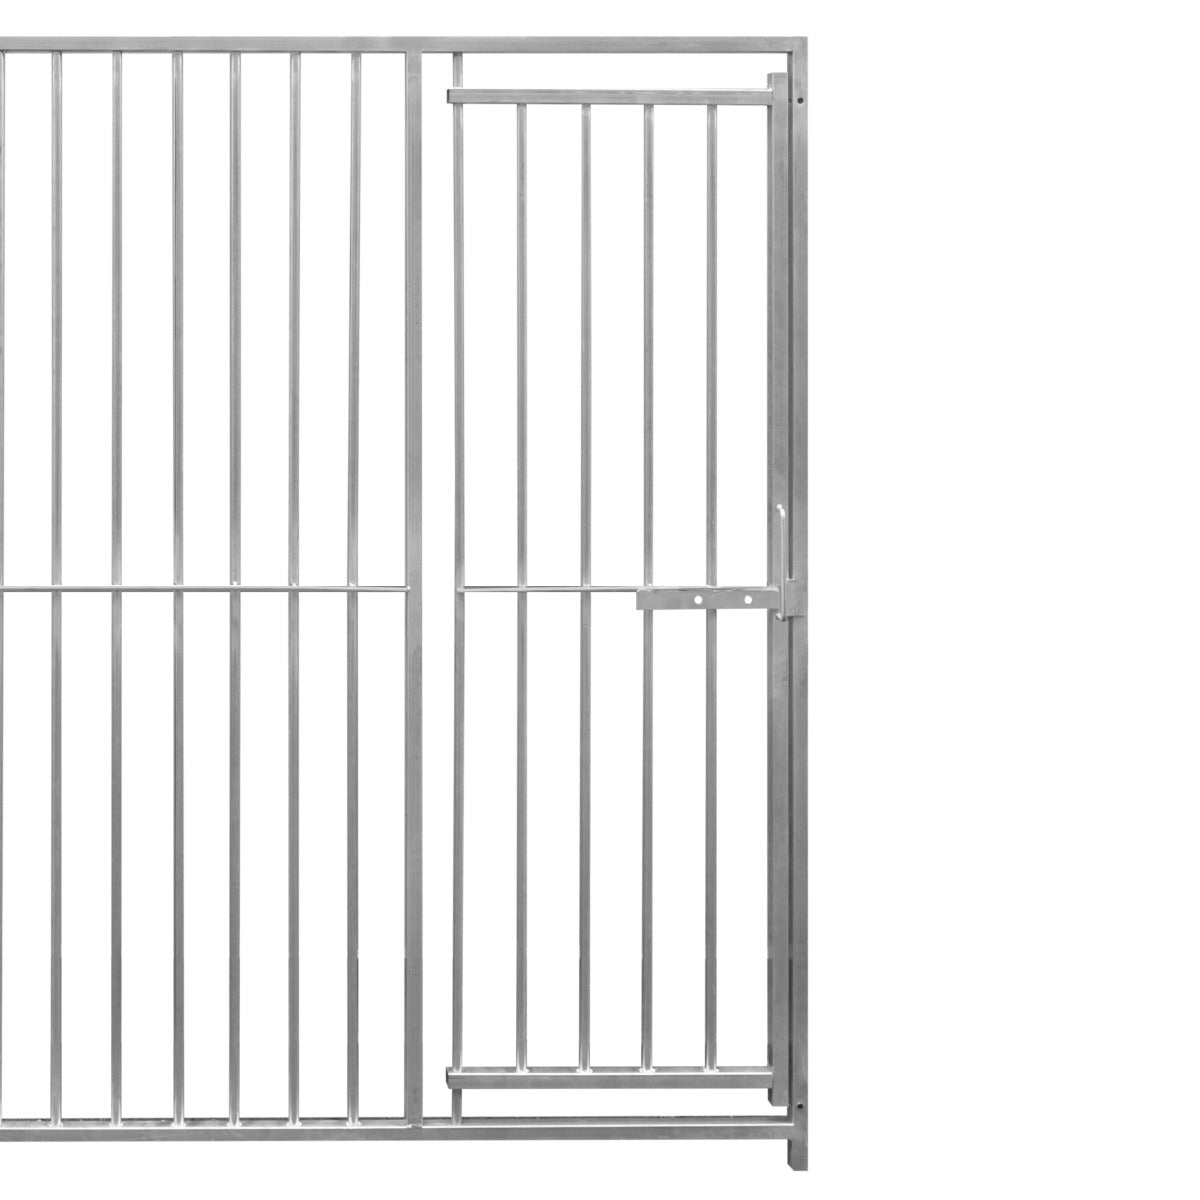 2m Dog Run Panel With Door – 8cm Bar Spacing